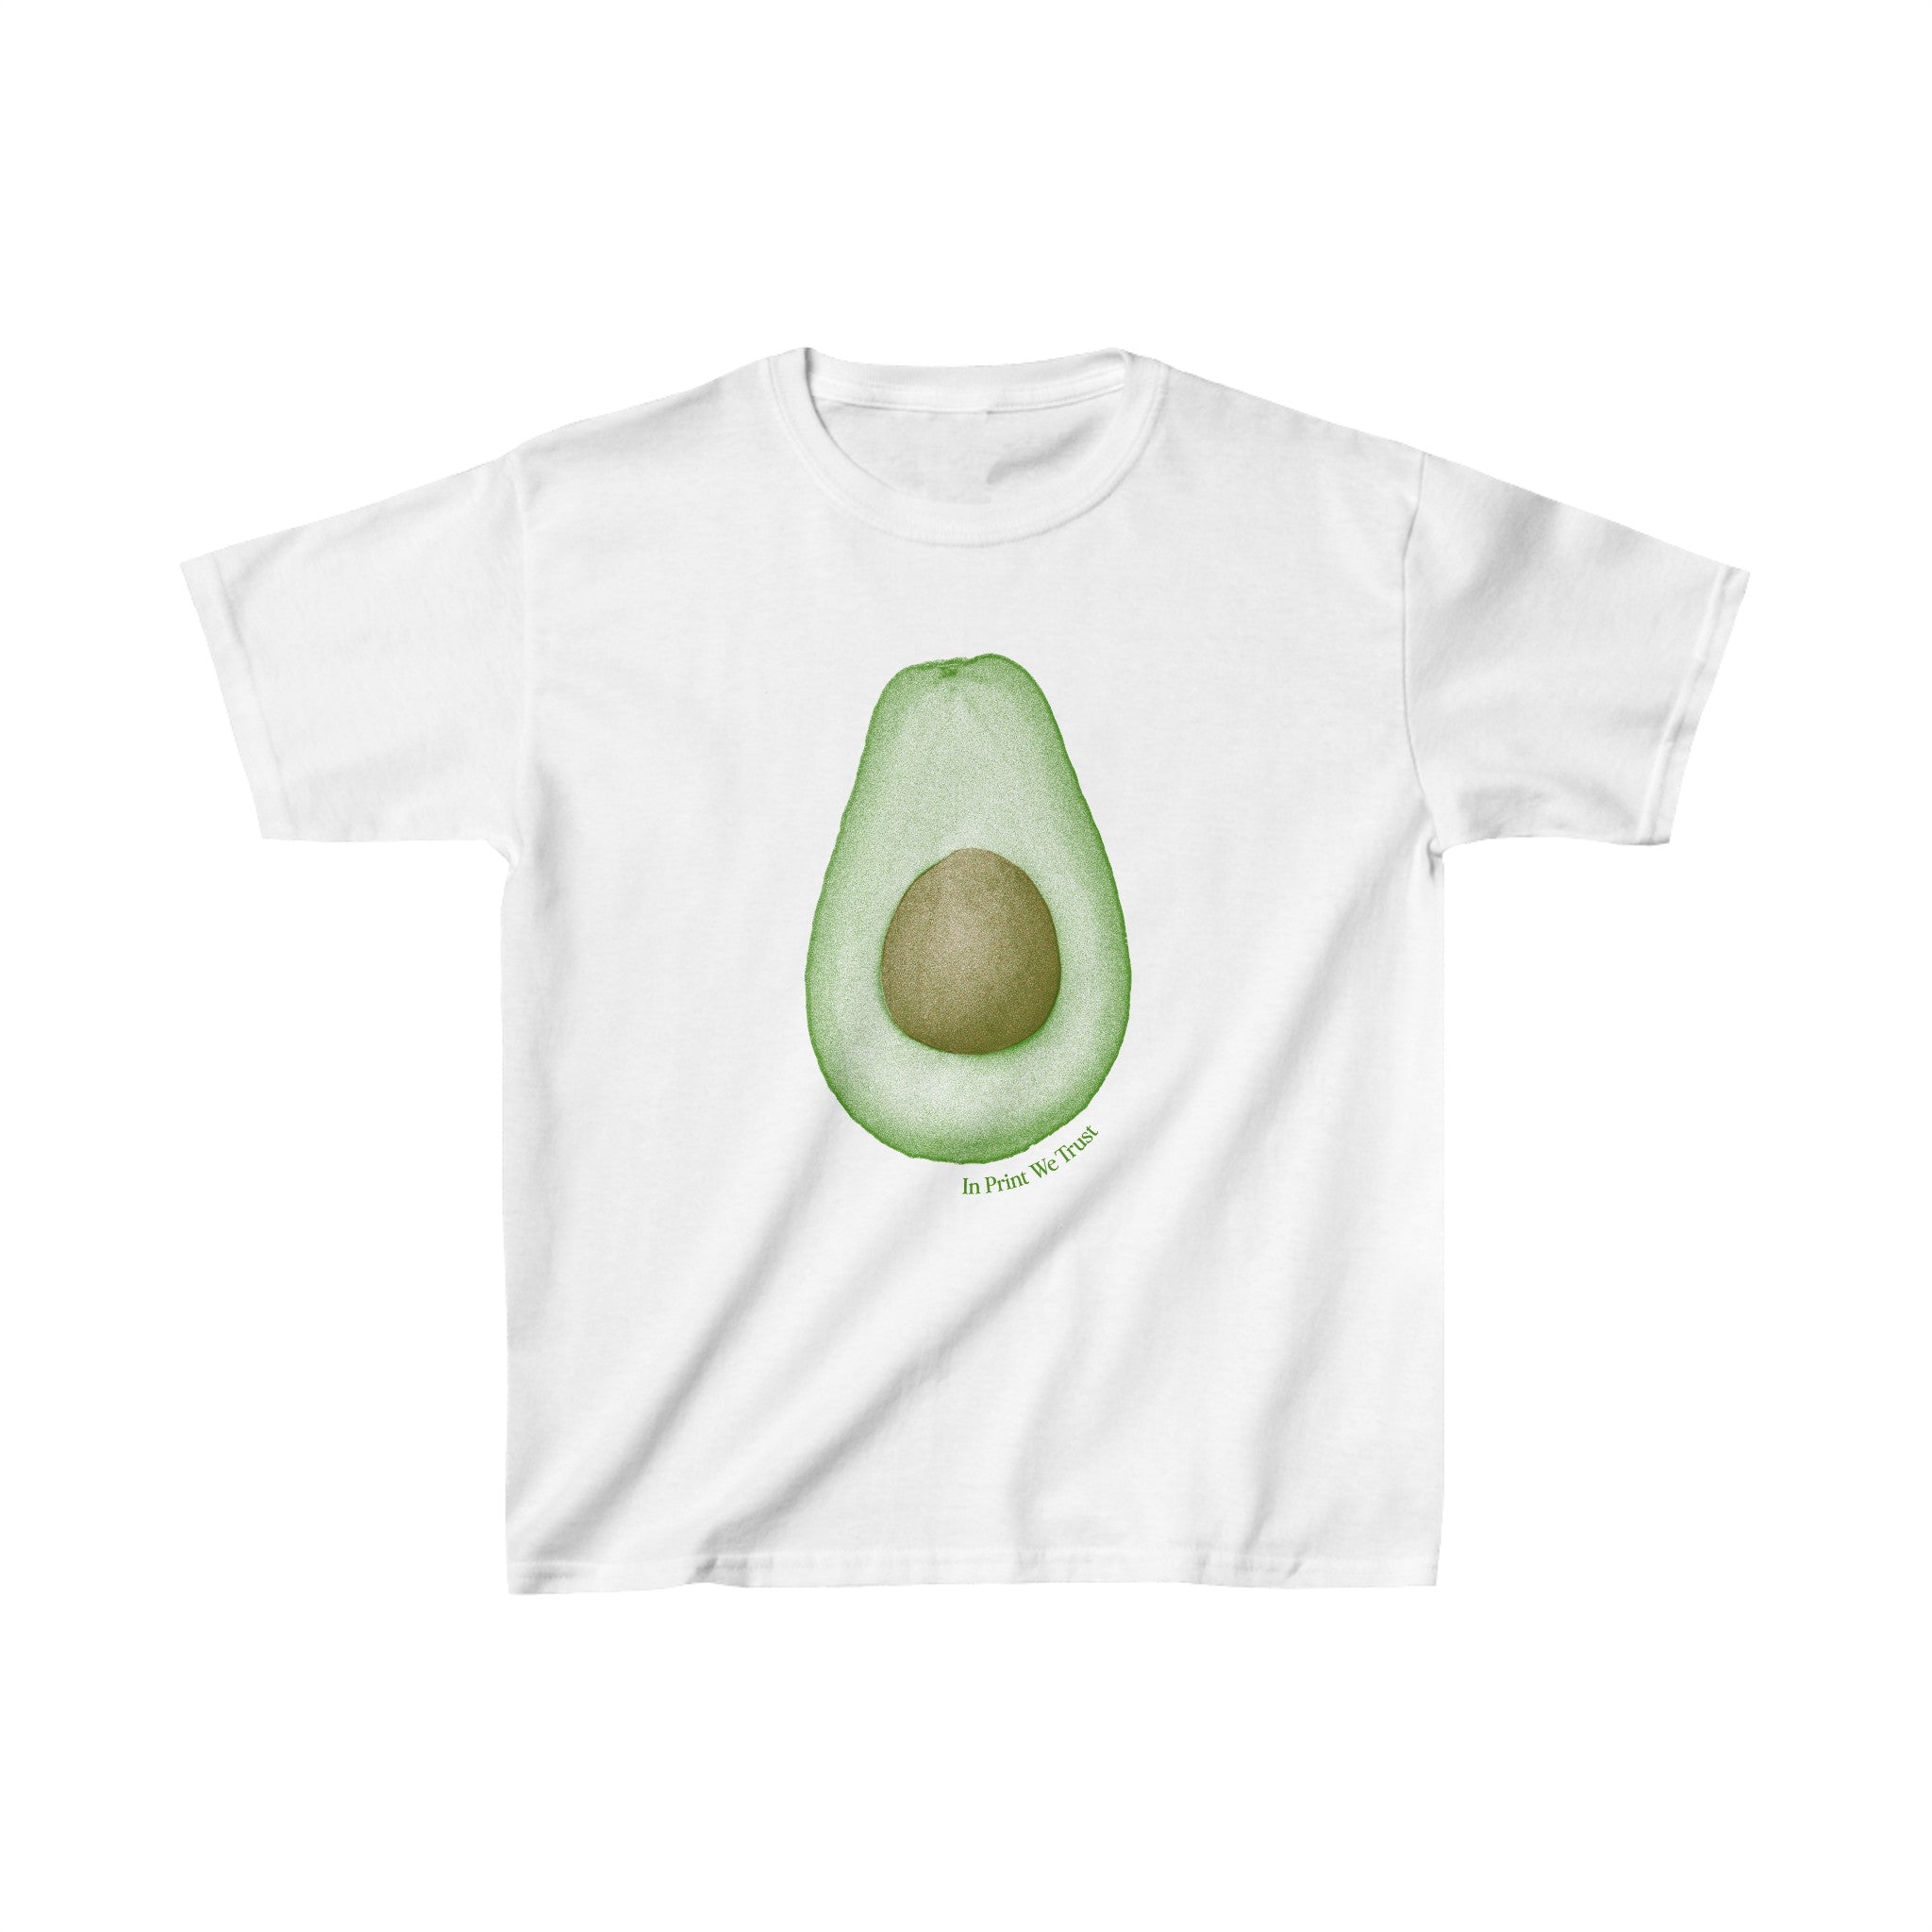 'Avocado' baby tee - In Print We Trust